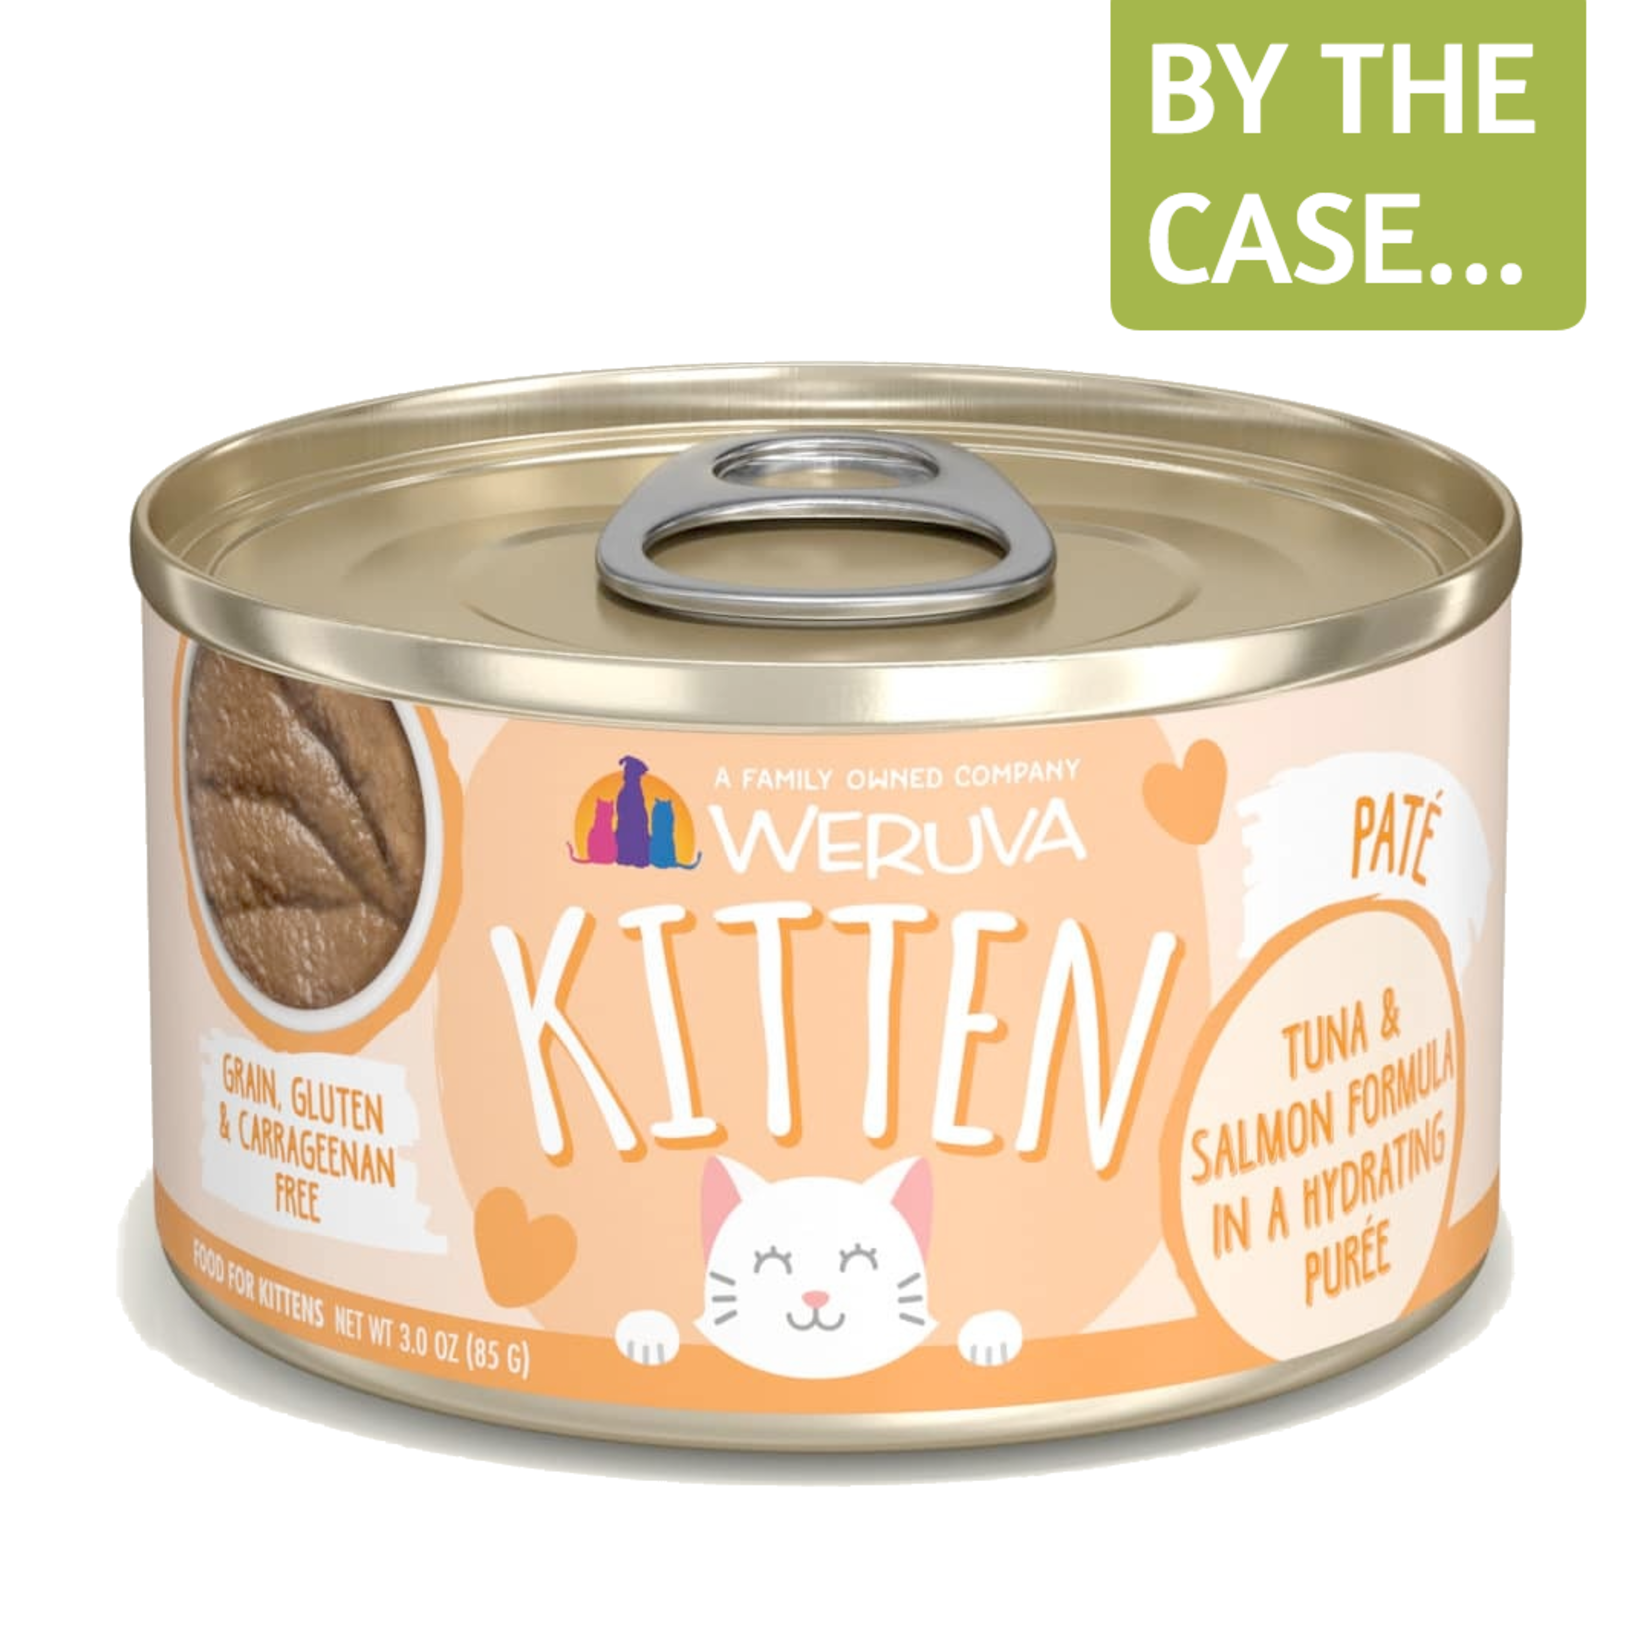 Weruva Weruva Kitten Wet Cat Food Tuna and Salmon Formula in a Hydrating Puree 3.0oz Can Grain Free